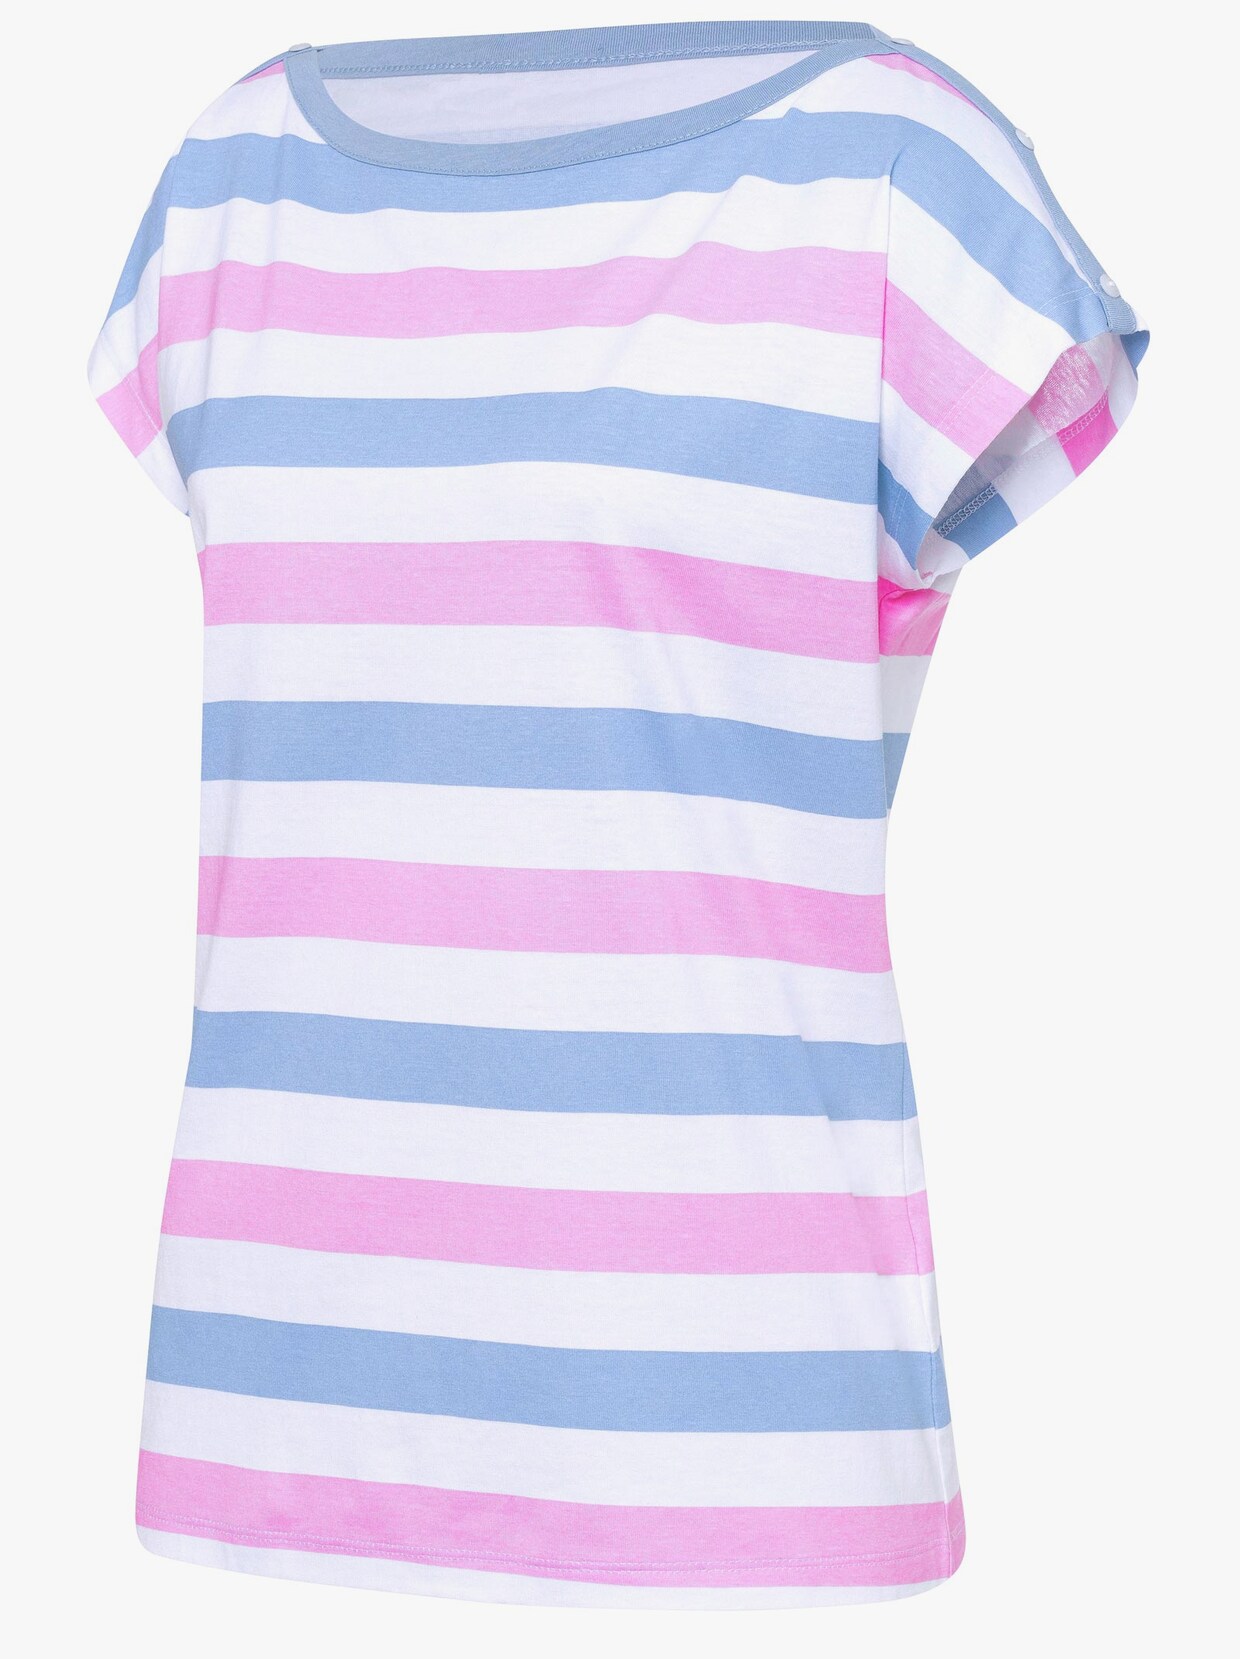 Proužkované tričko - růžová-modrá-proužek